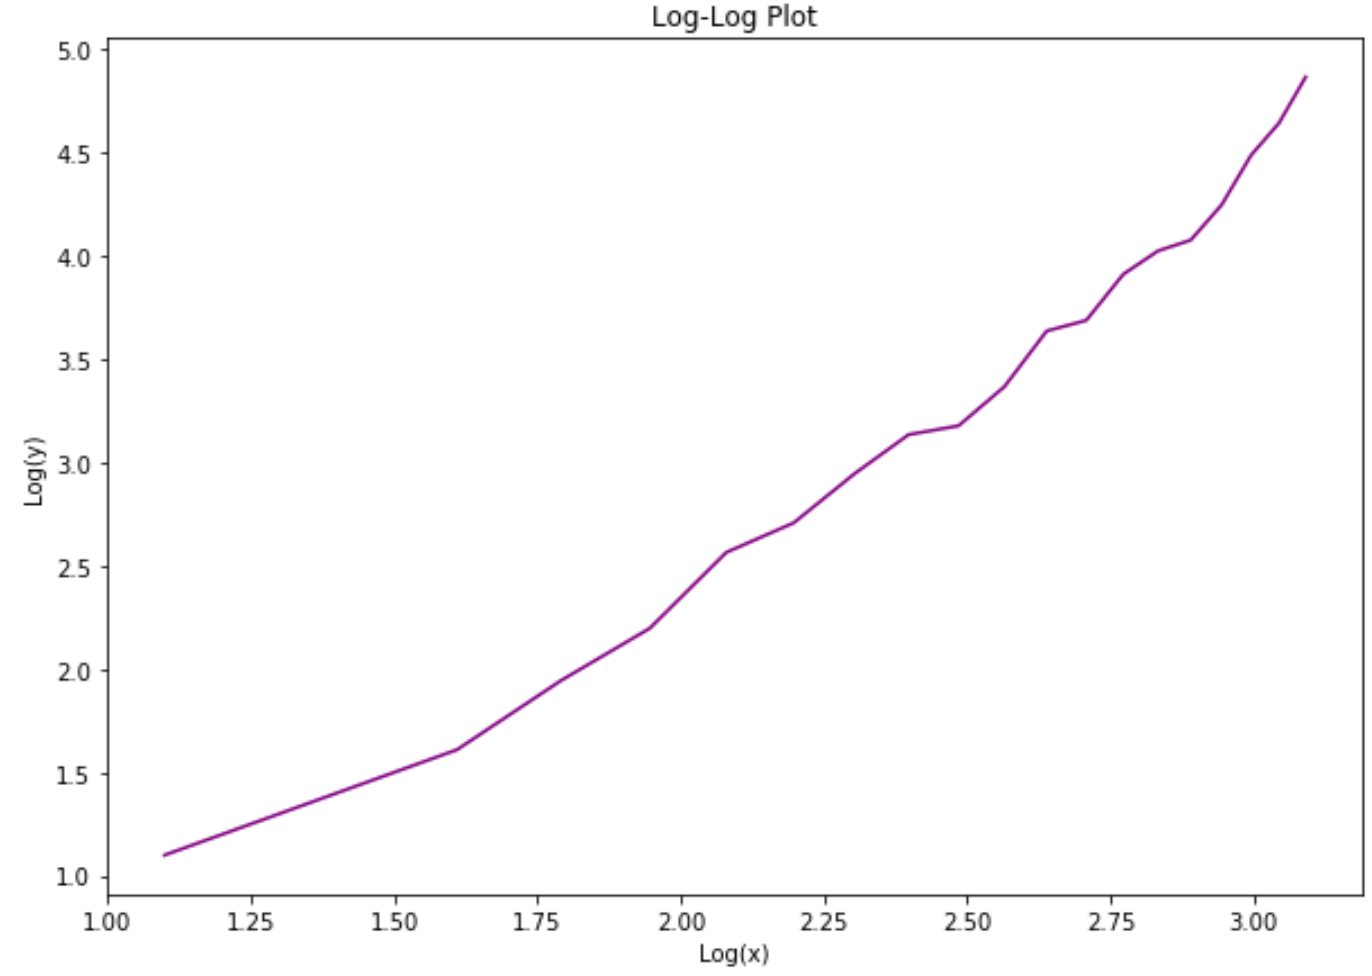 Log-log plot in Python